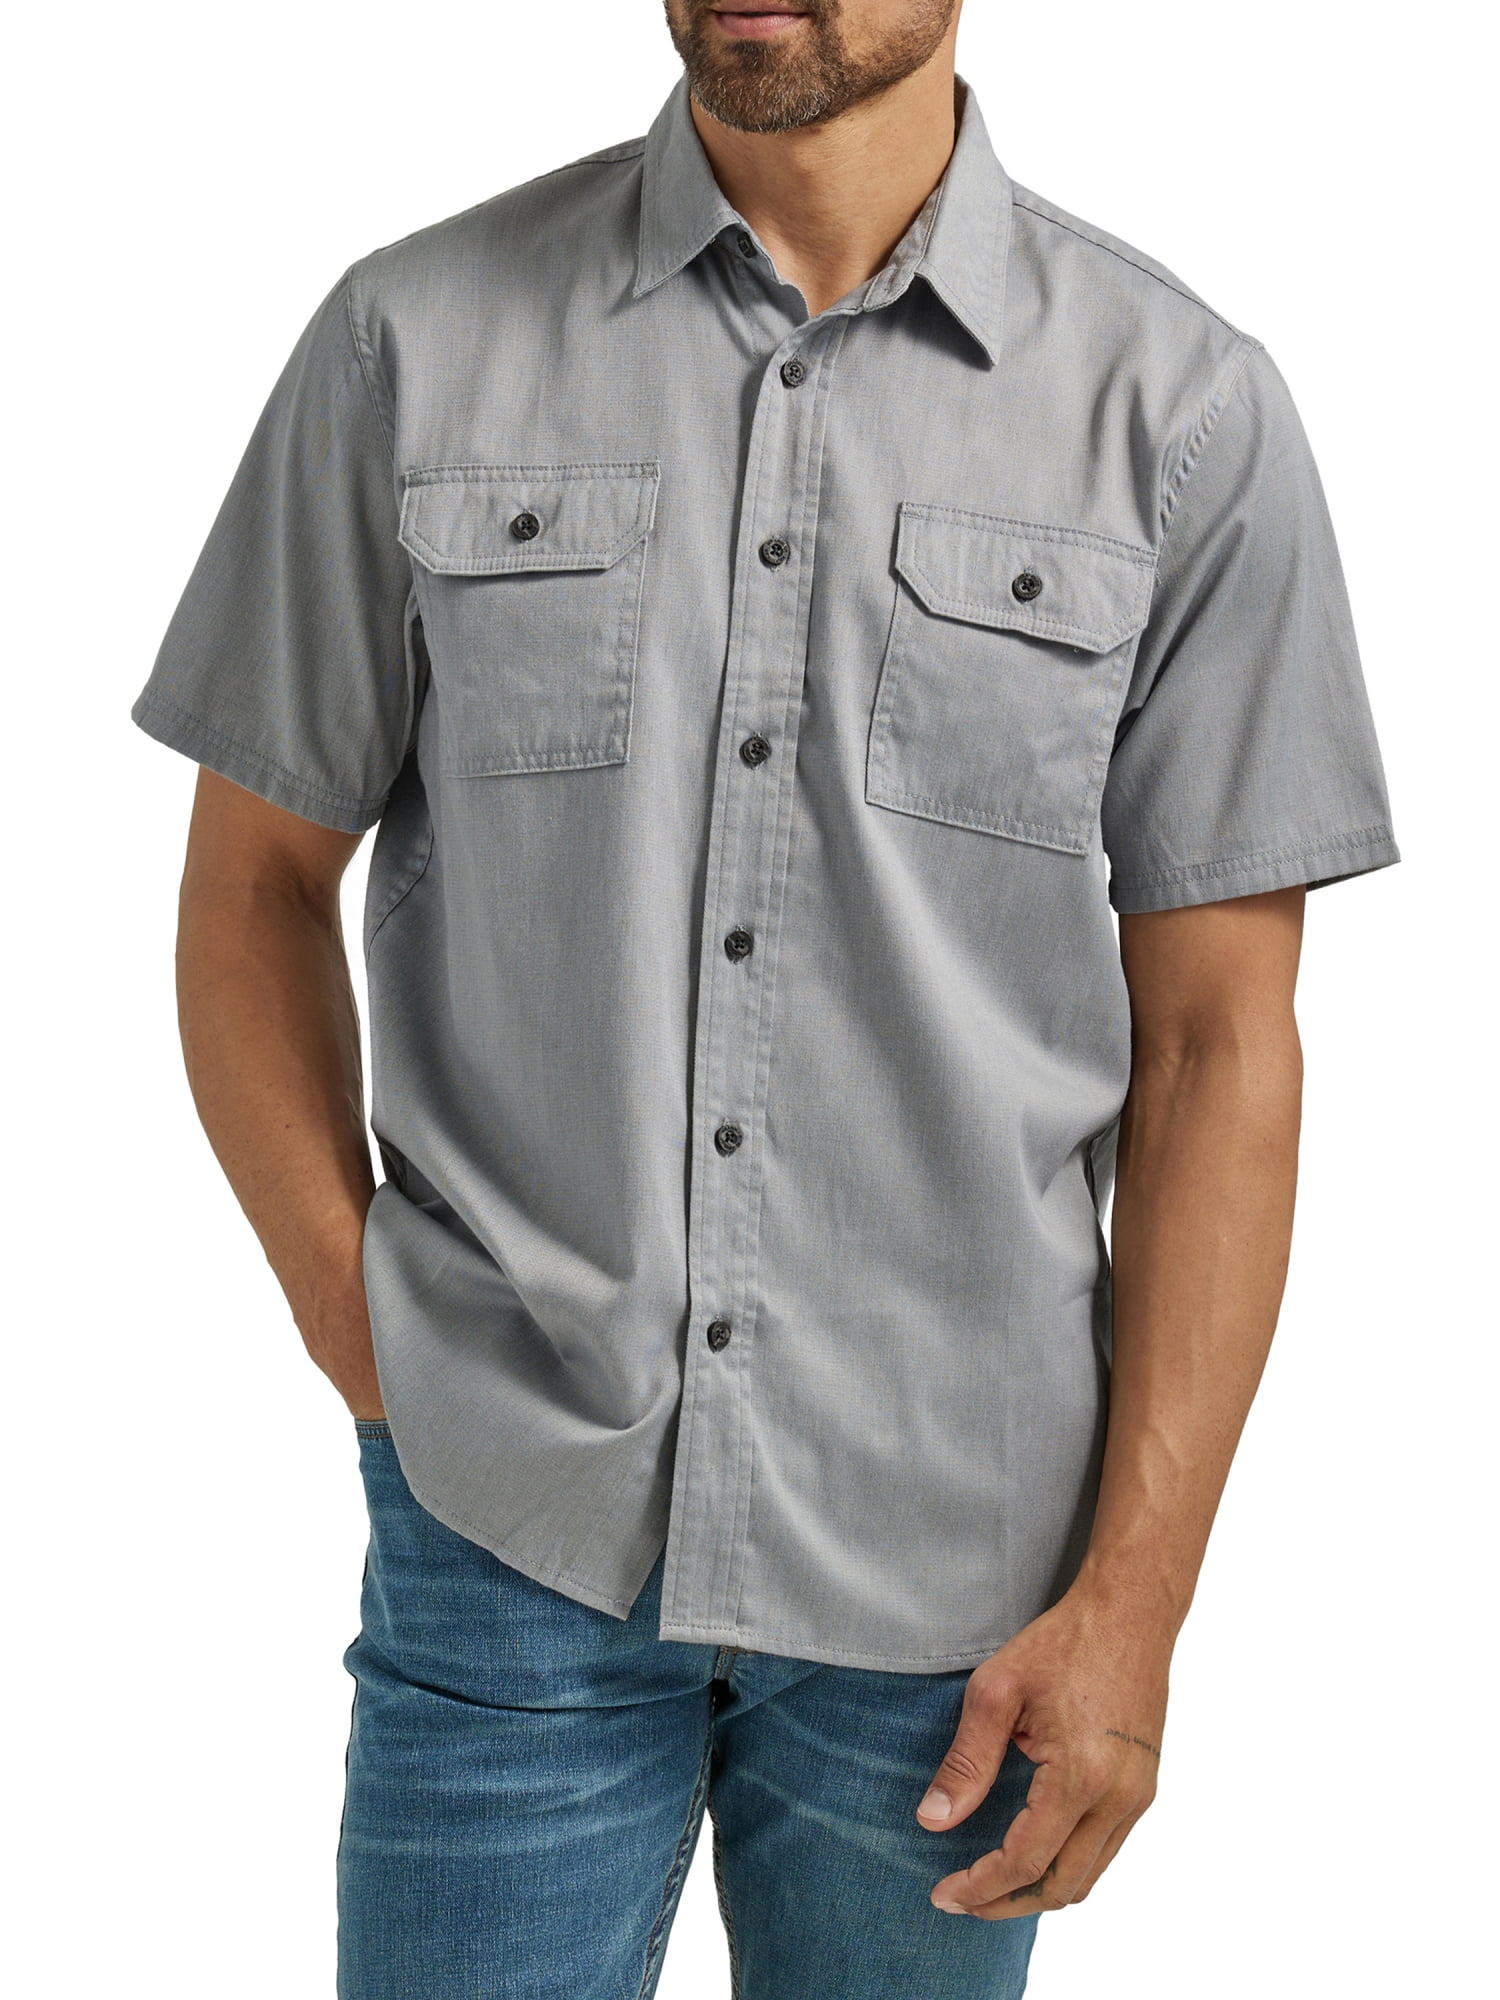 Wrangler Men's Short Sleeve Woven Shirt, Sizes S-5XL - Walmart.com